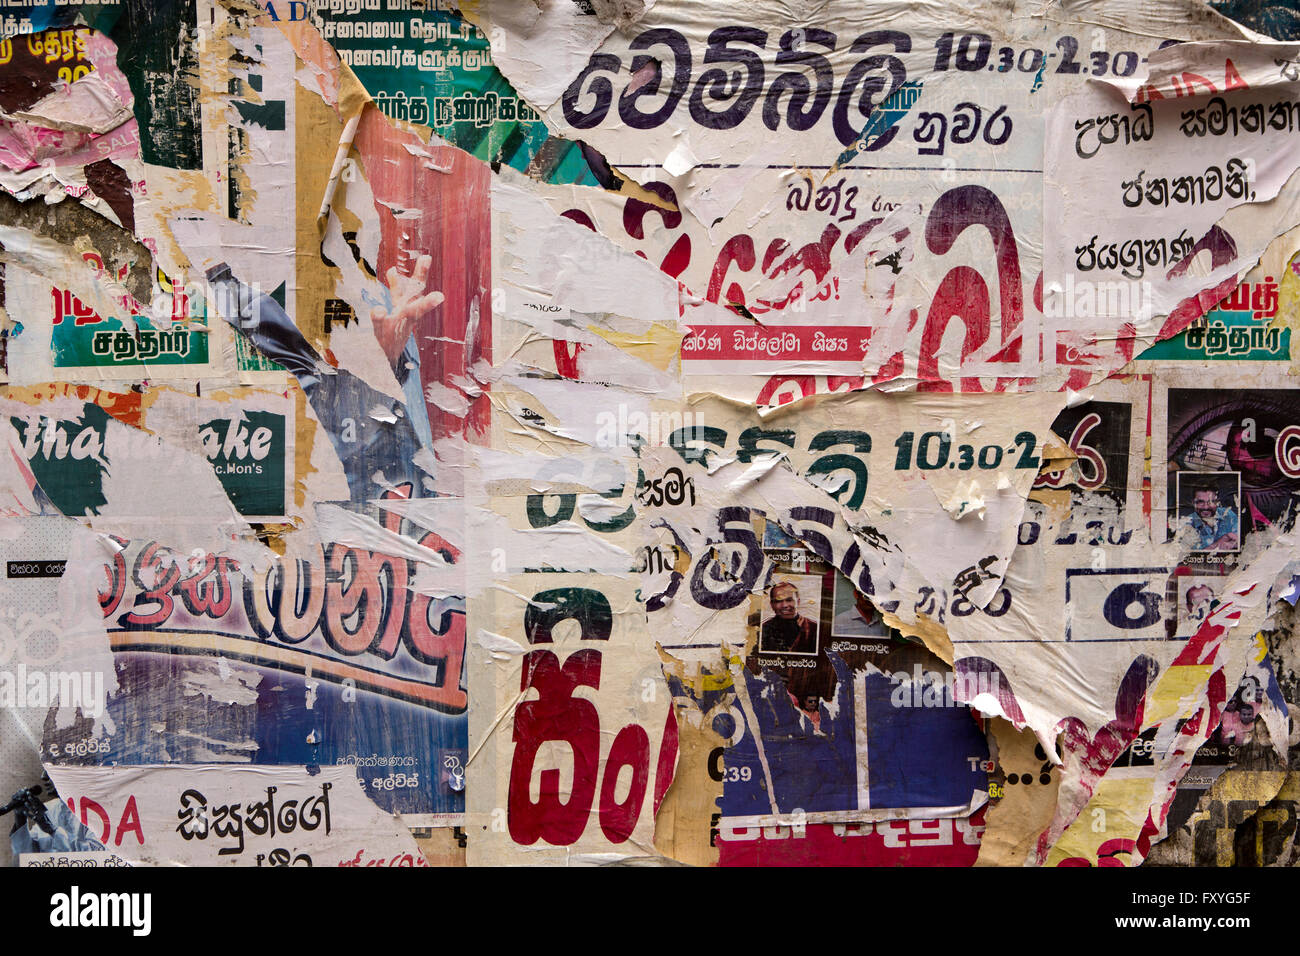 Sri Lanka, Kandy, Colombo Street, ephemera, manifesti stracciati Foto Stock